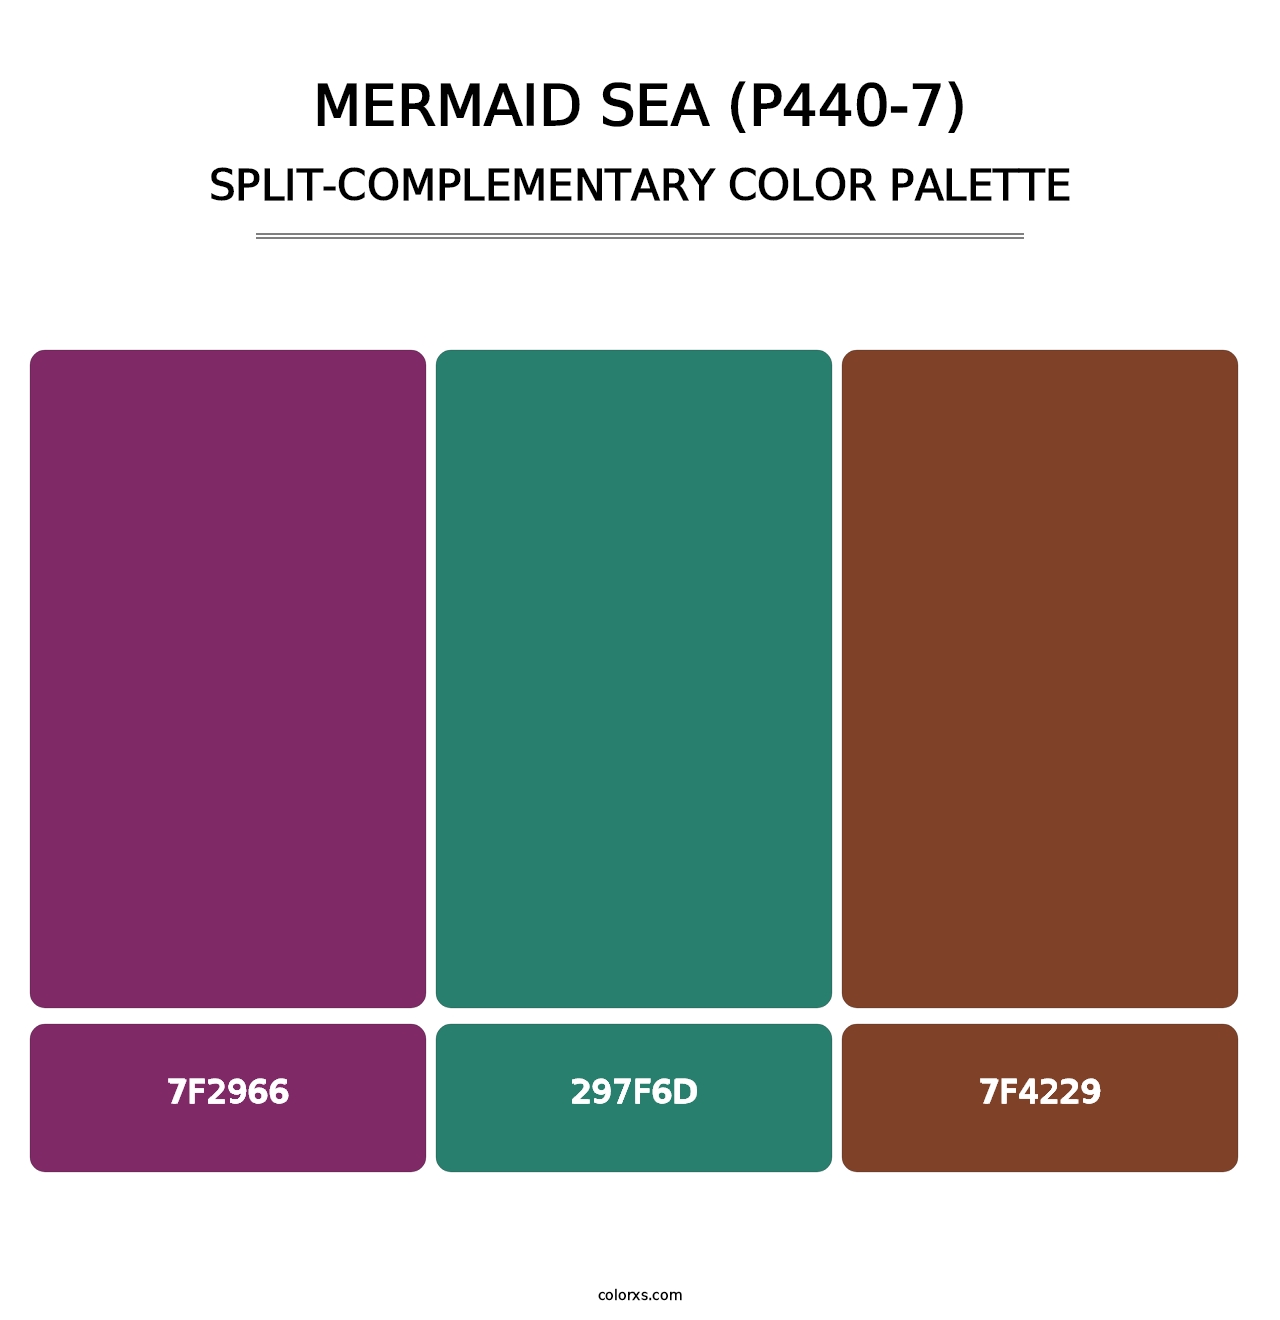 Mermaid Sea (P440-7) - Split-Complementary Color Palette